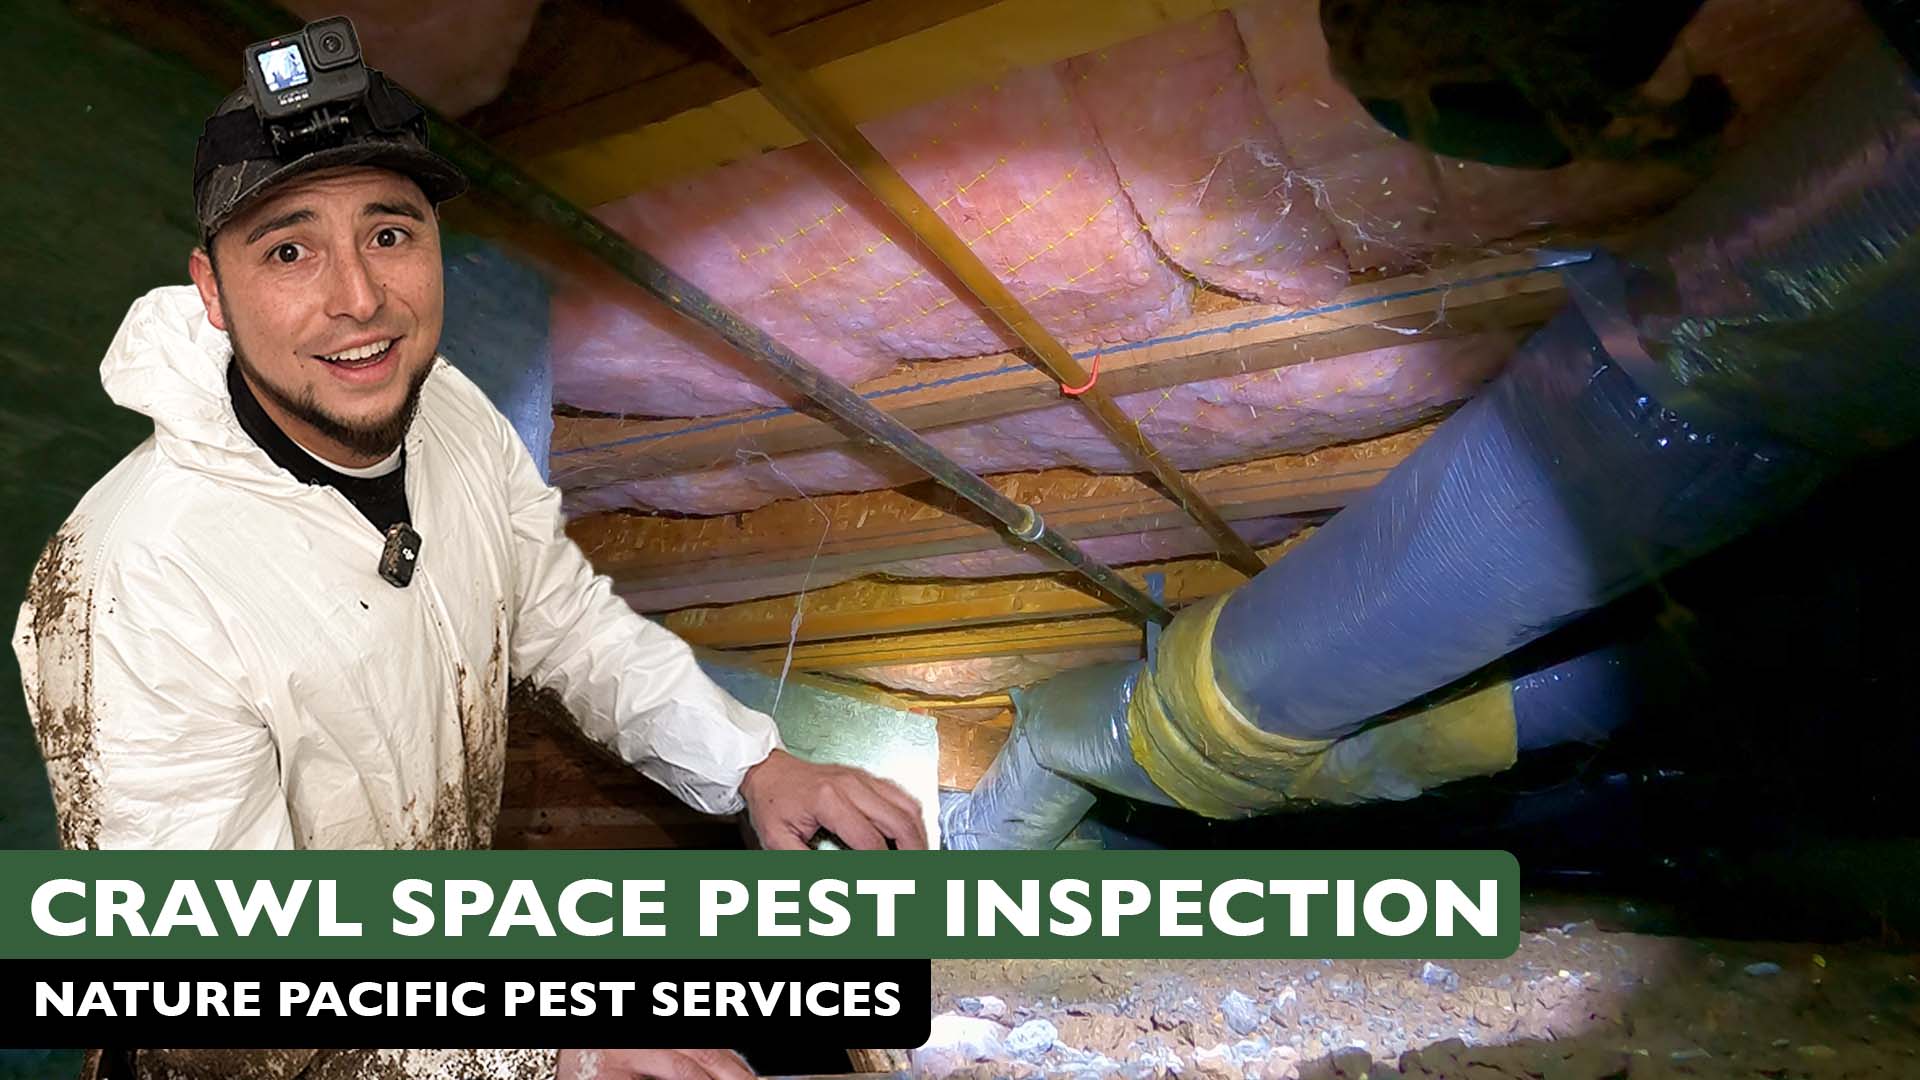 Crawl Space Pest Inspection in Santa Rosa, CA